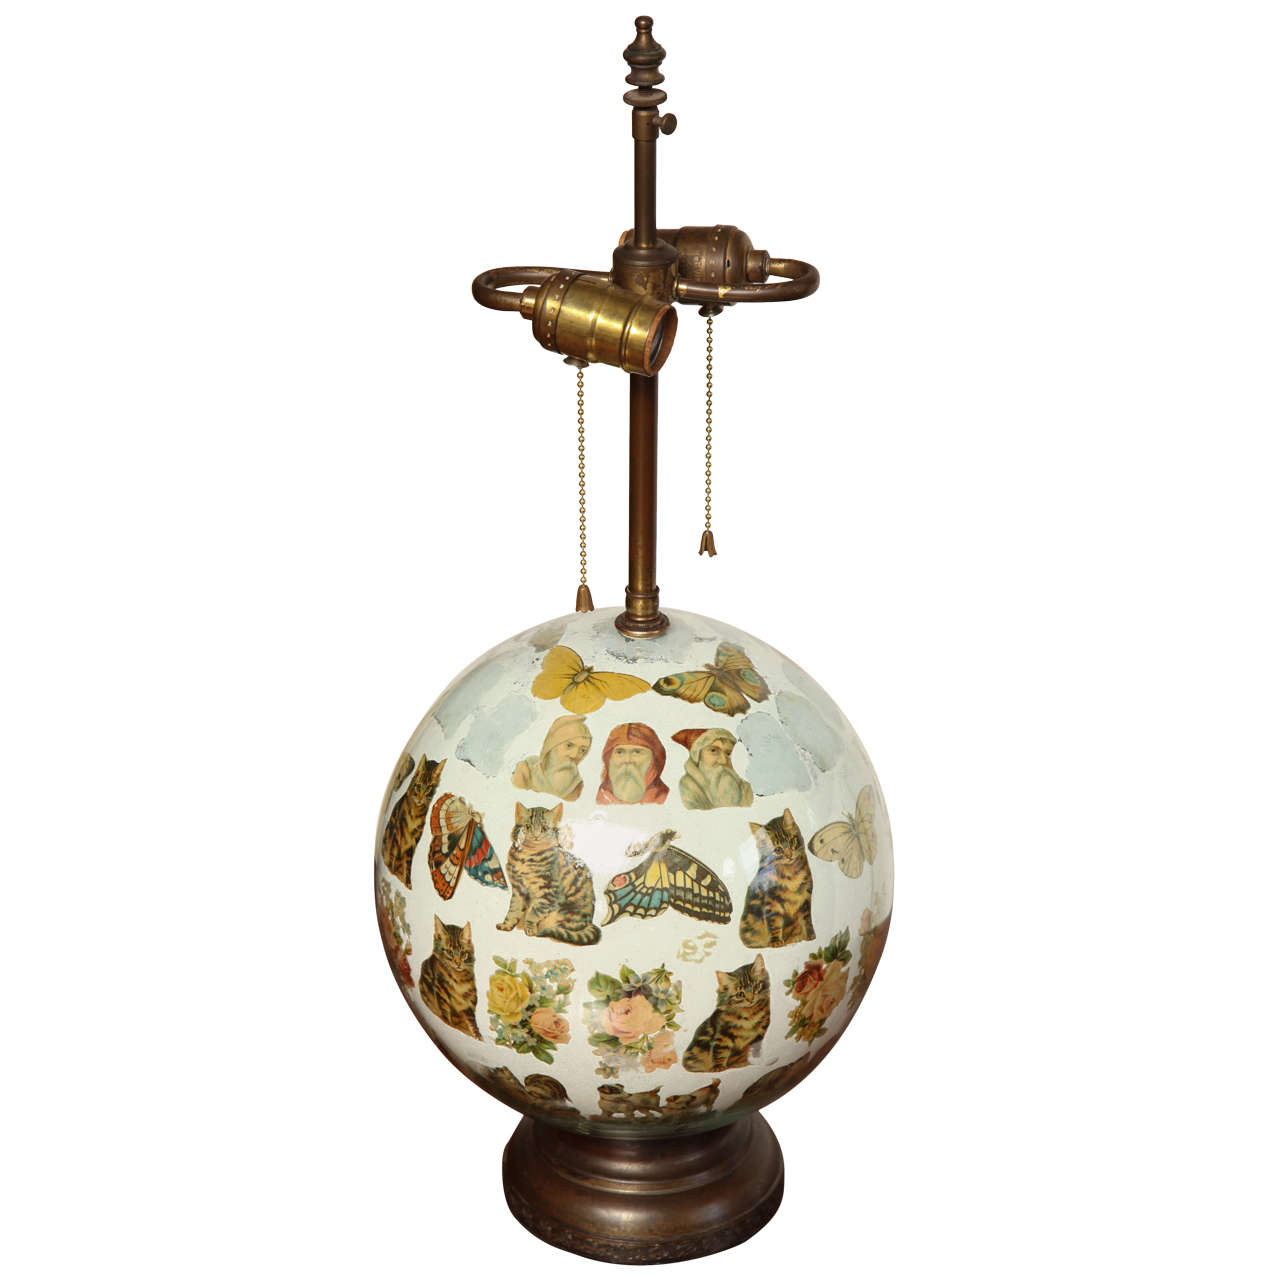 A Globe, De Coupage Lamp